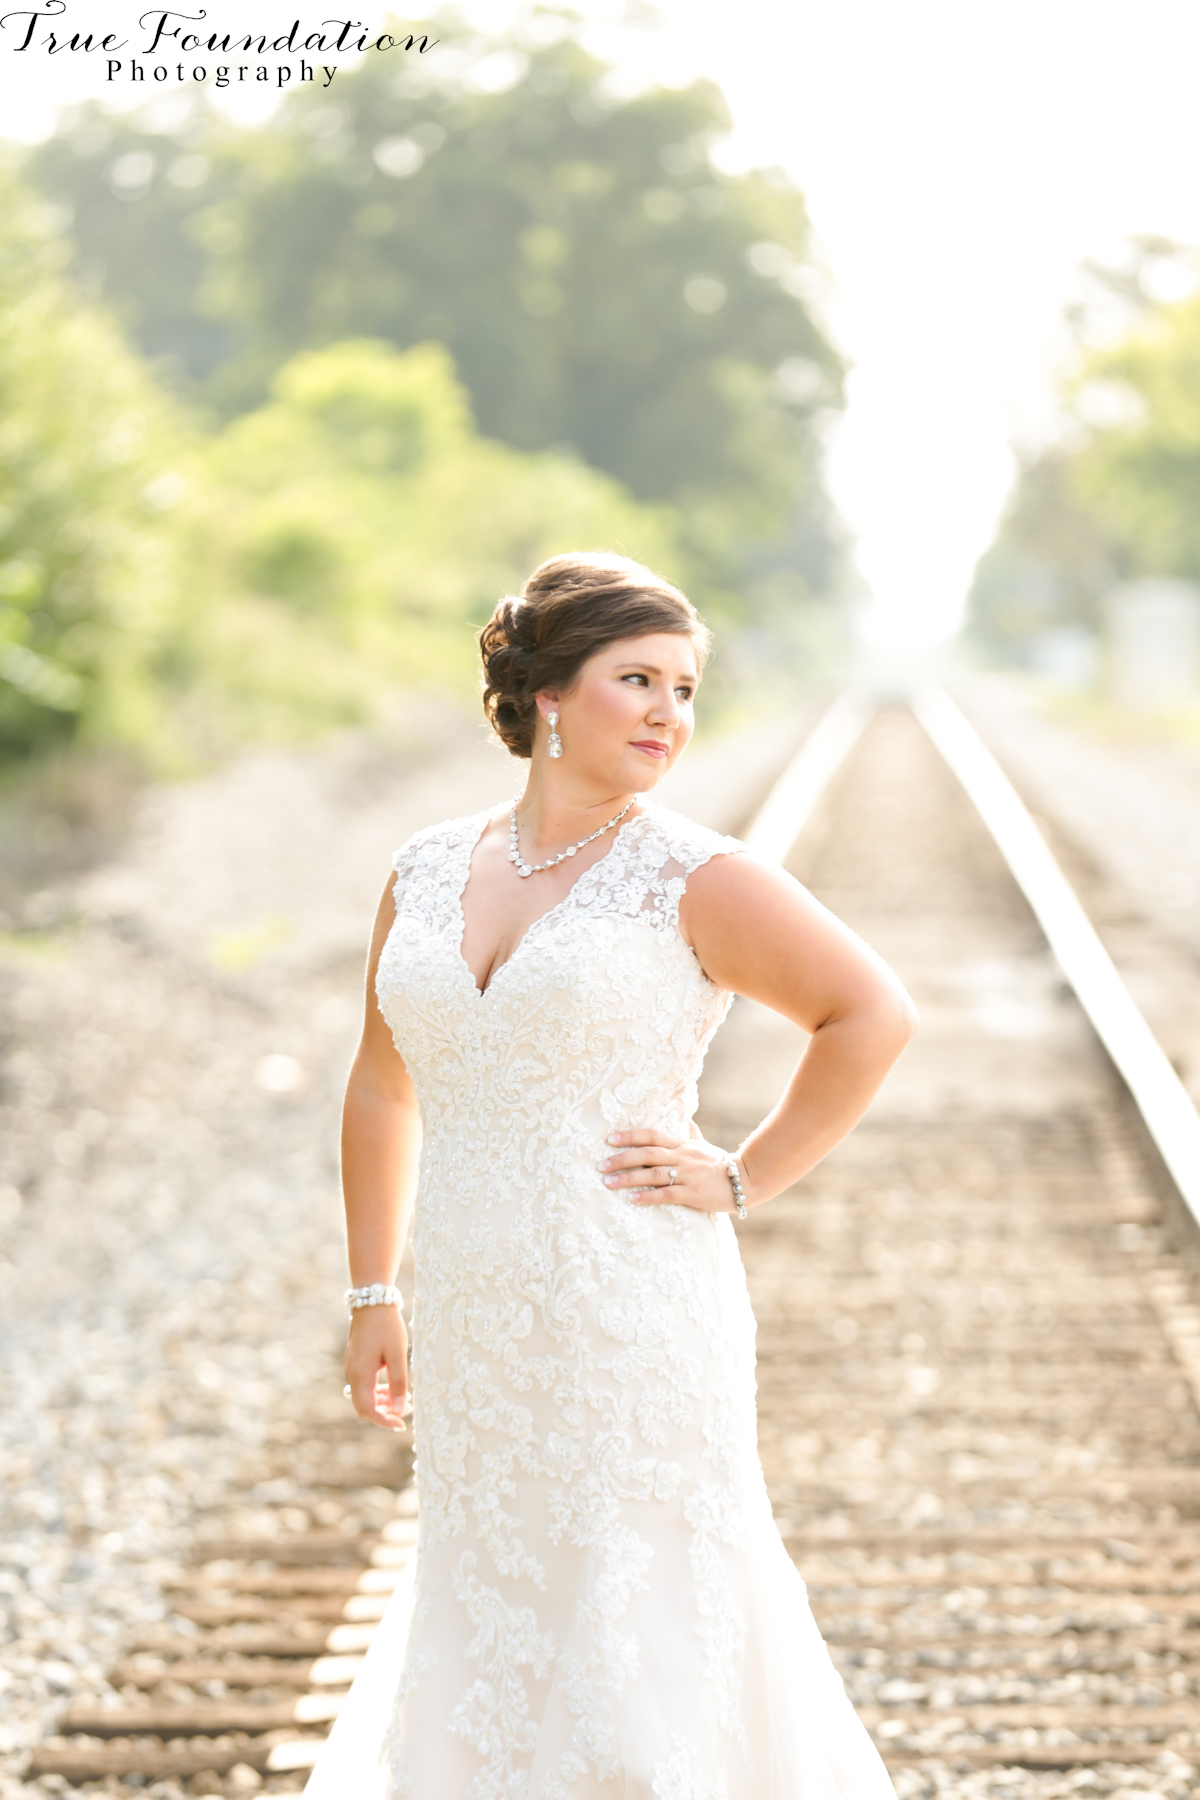 Bridal - Portrait - Photography - Photos - Hendersonville - NC - Shelby - Photographers - Farm - Country - Pinterest - Bride (30)